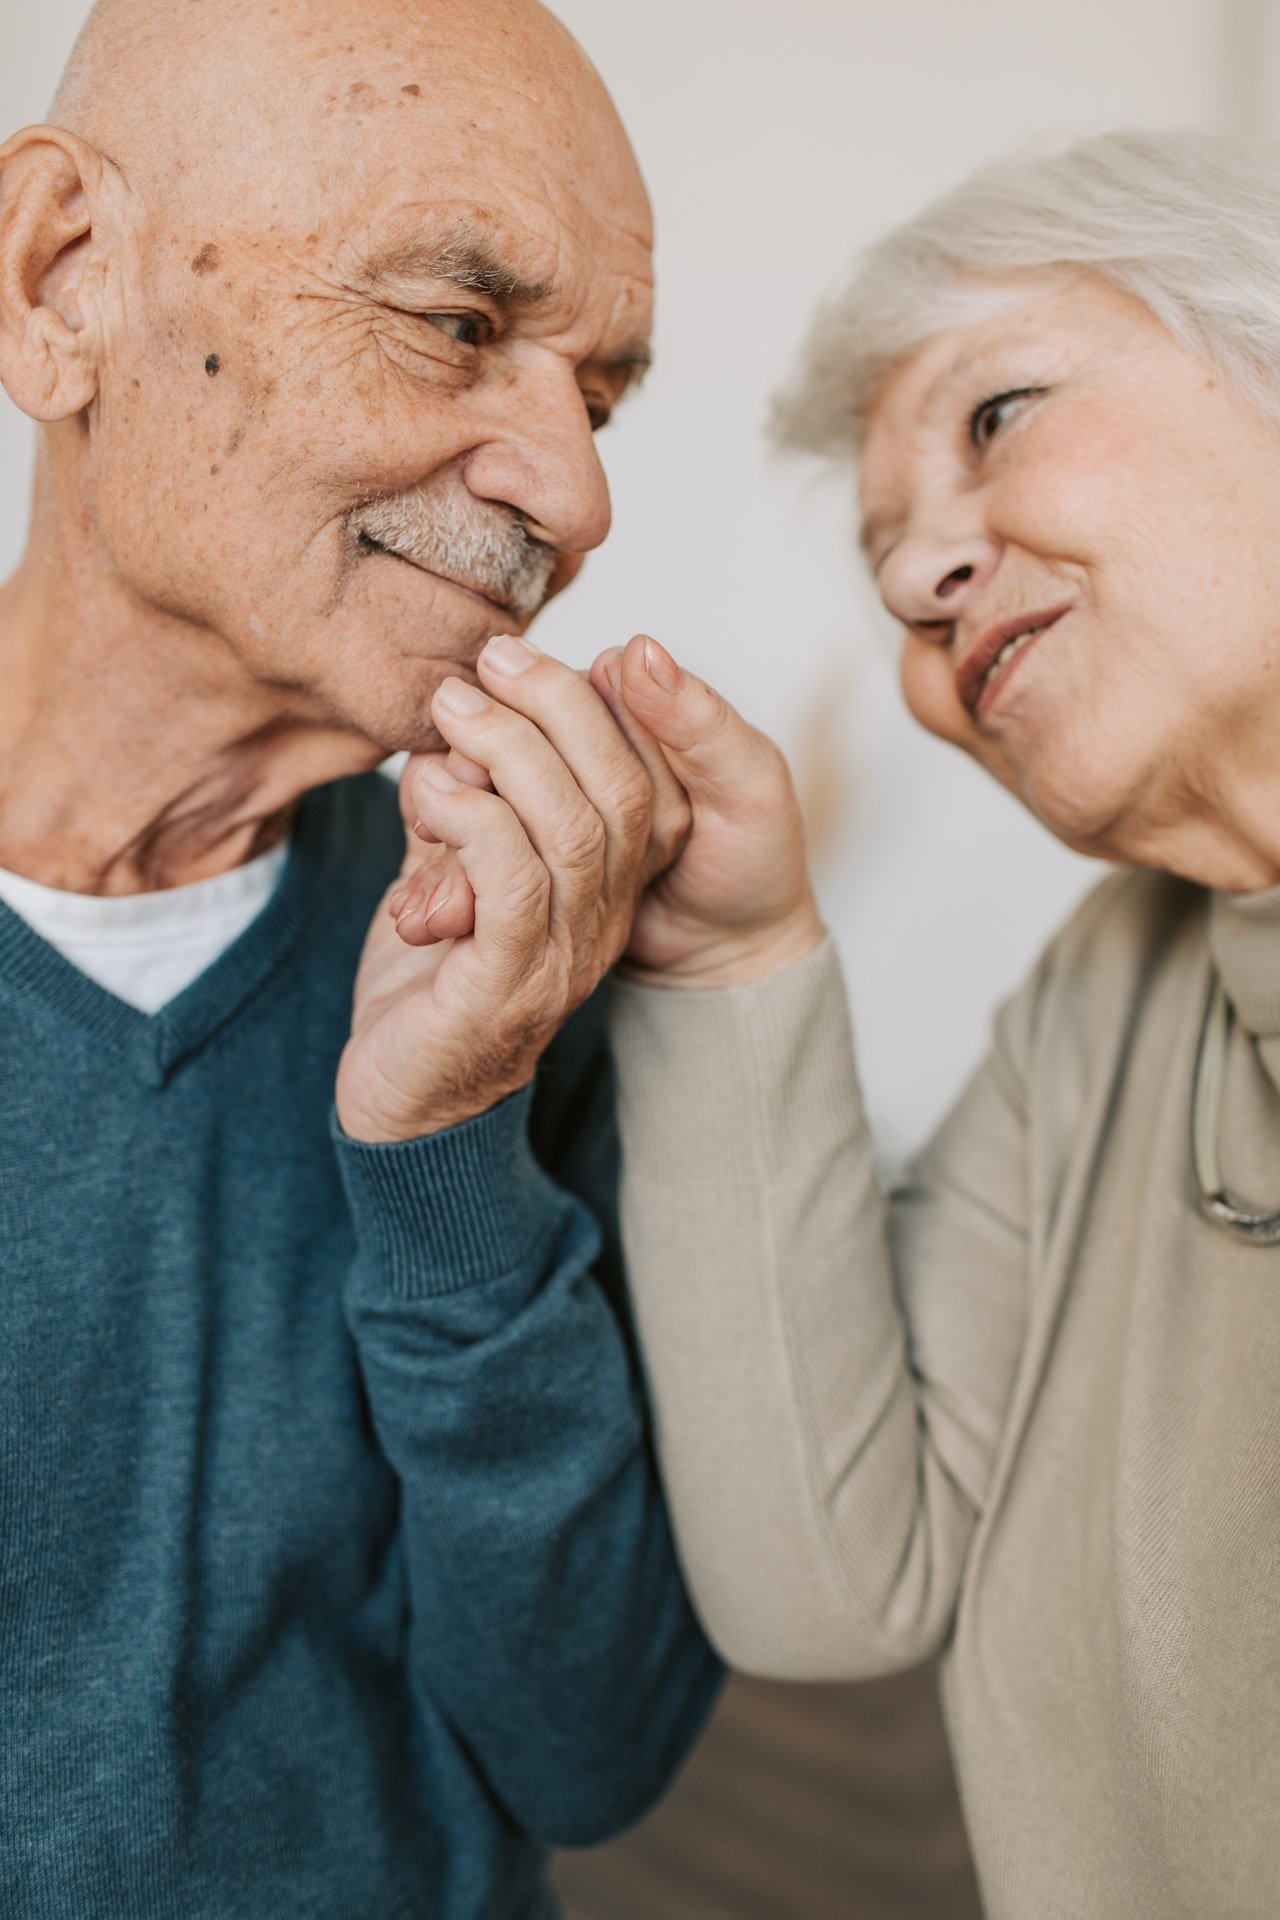 Älteres Paar zeigt Zuneigung | Quelle: Pexels